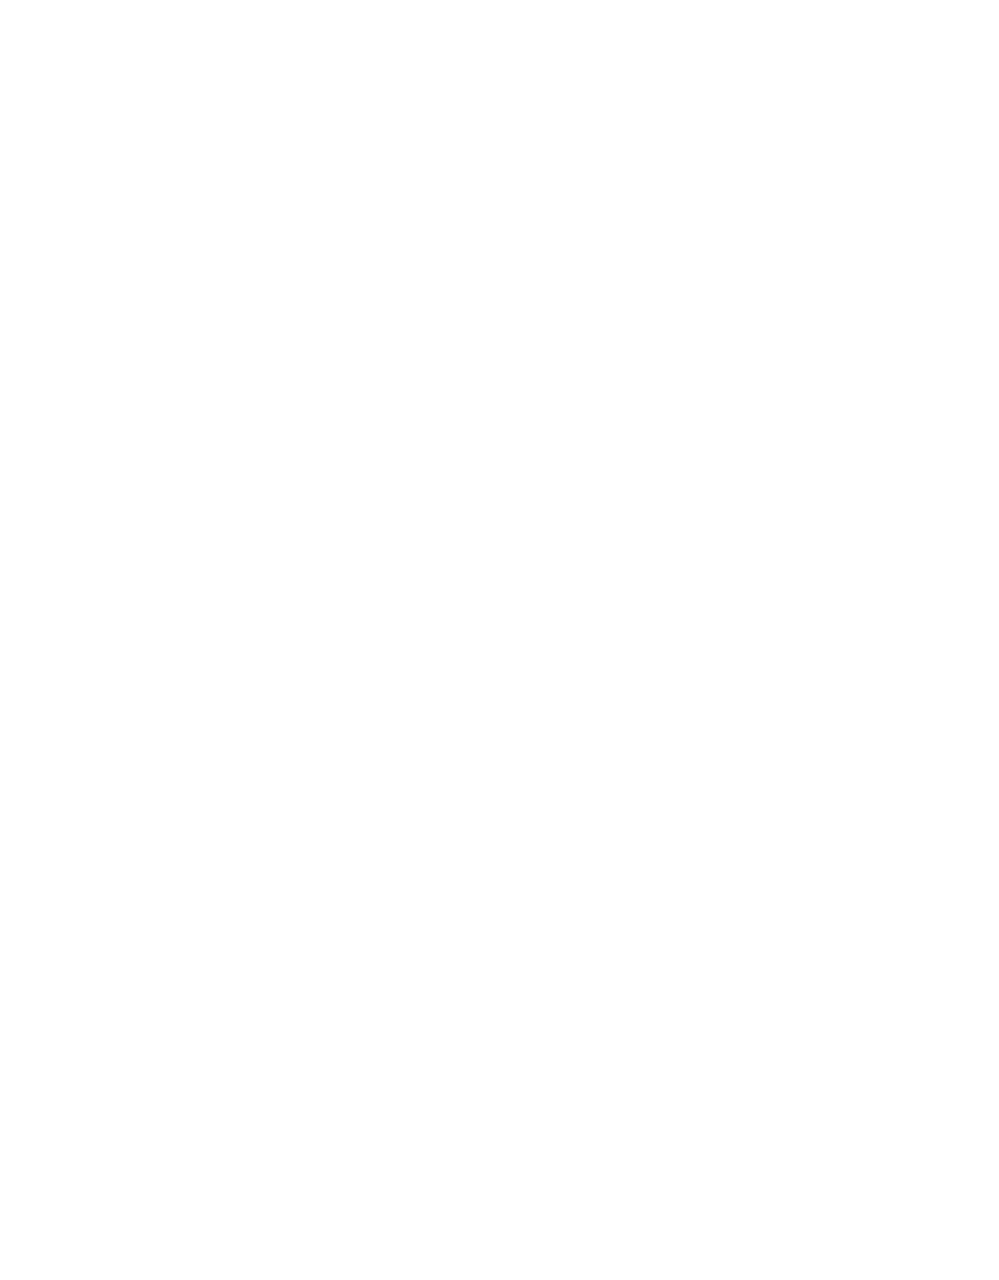 A.N. Созданы цвести 32х48 см. Холст, акрил, в багете. Мальдивы, 2023